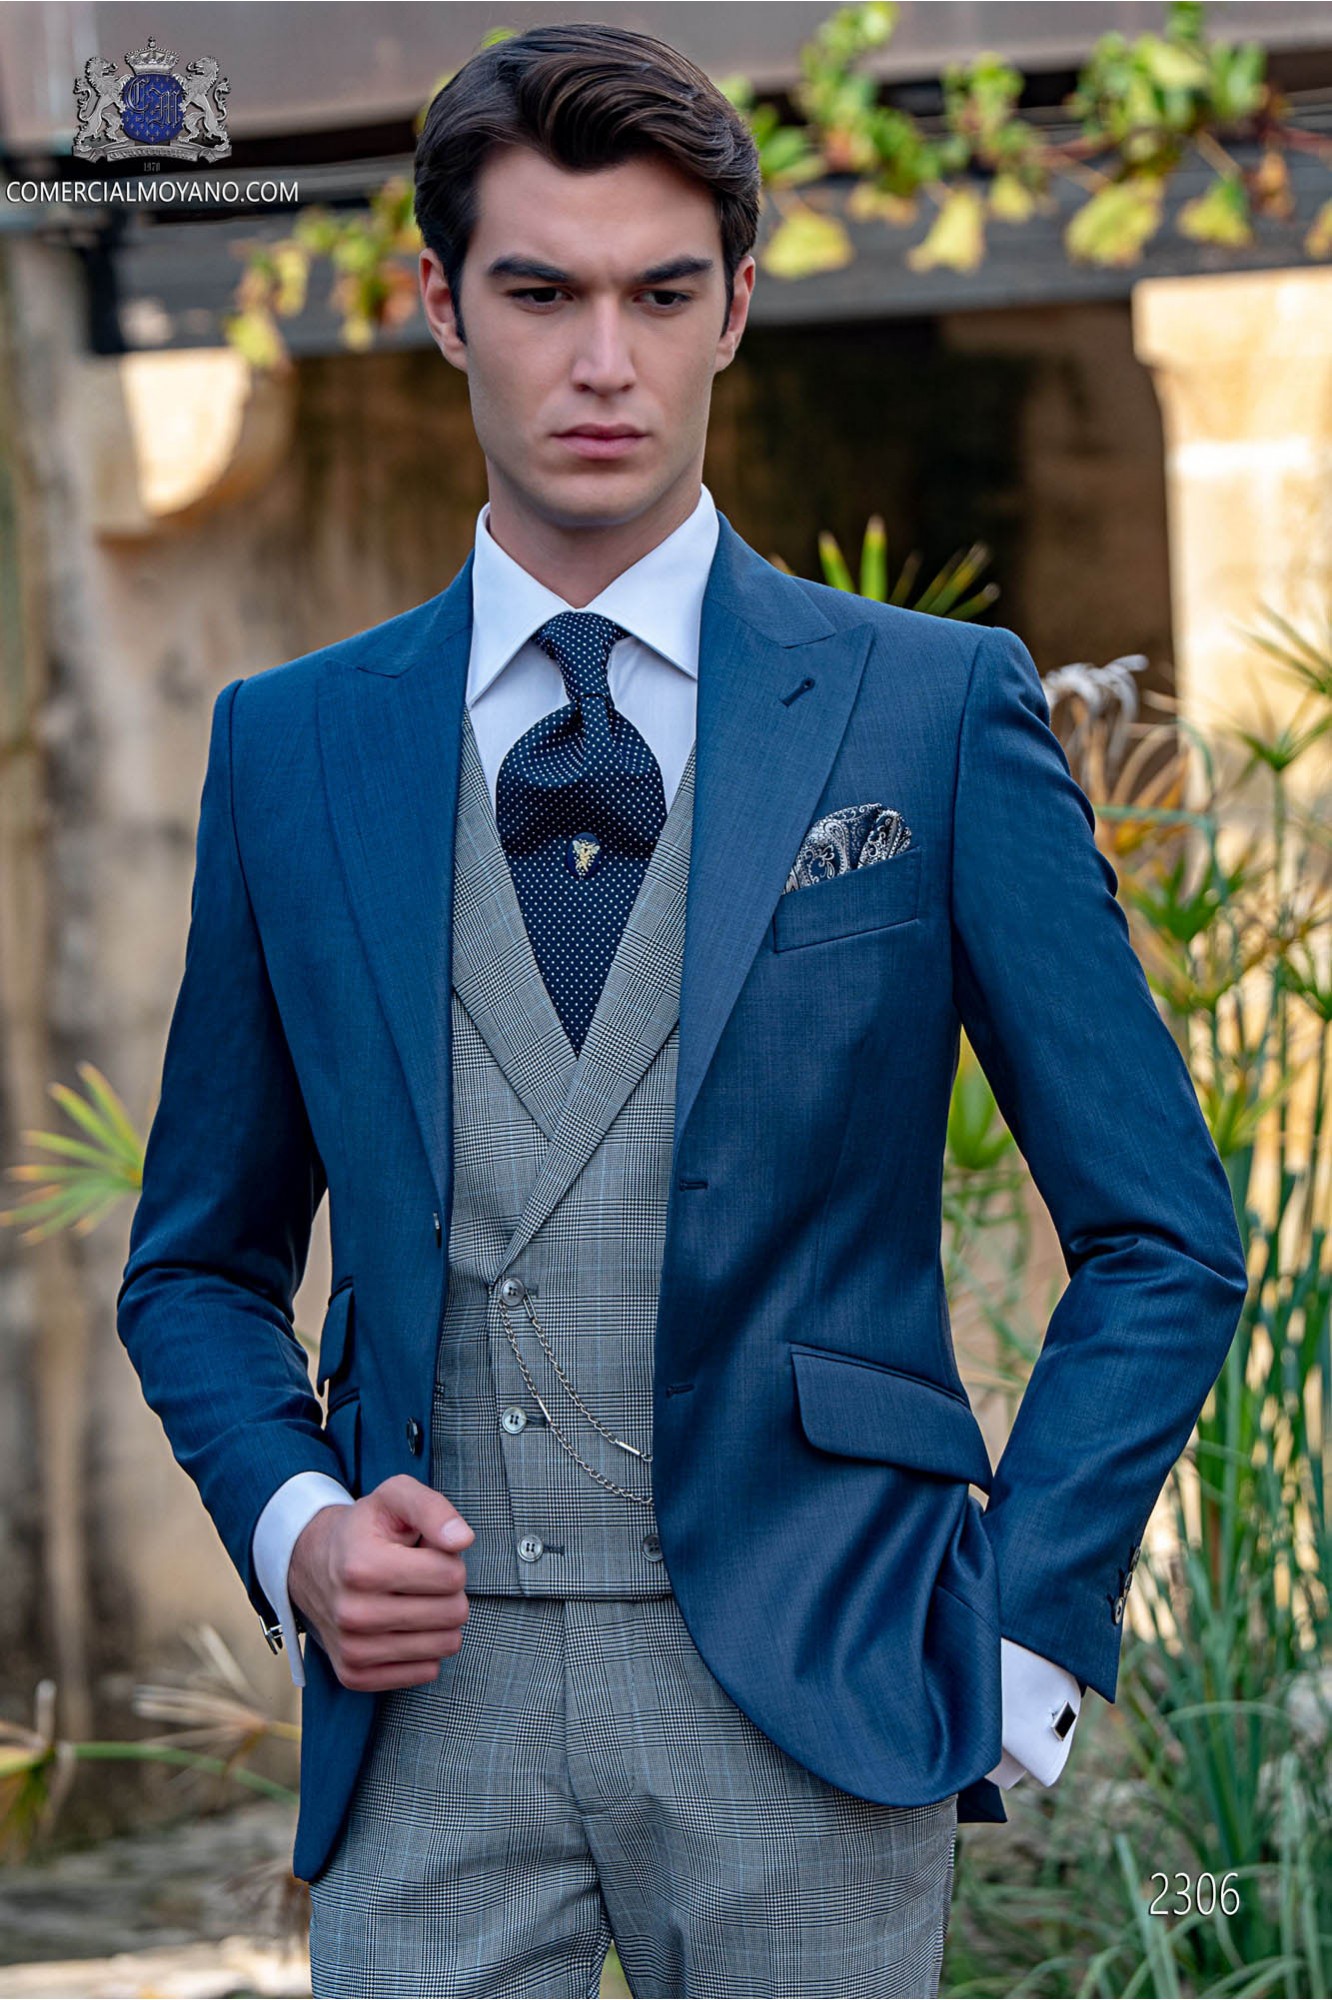 Tailored blue suit model 2306 Mario Moyano